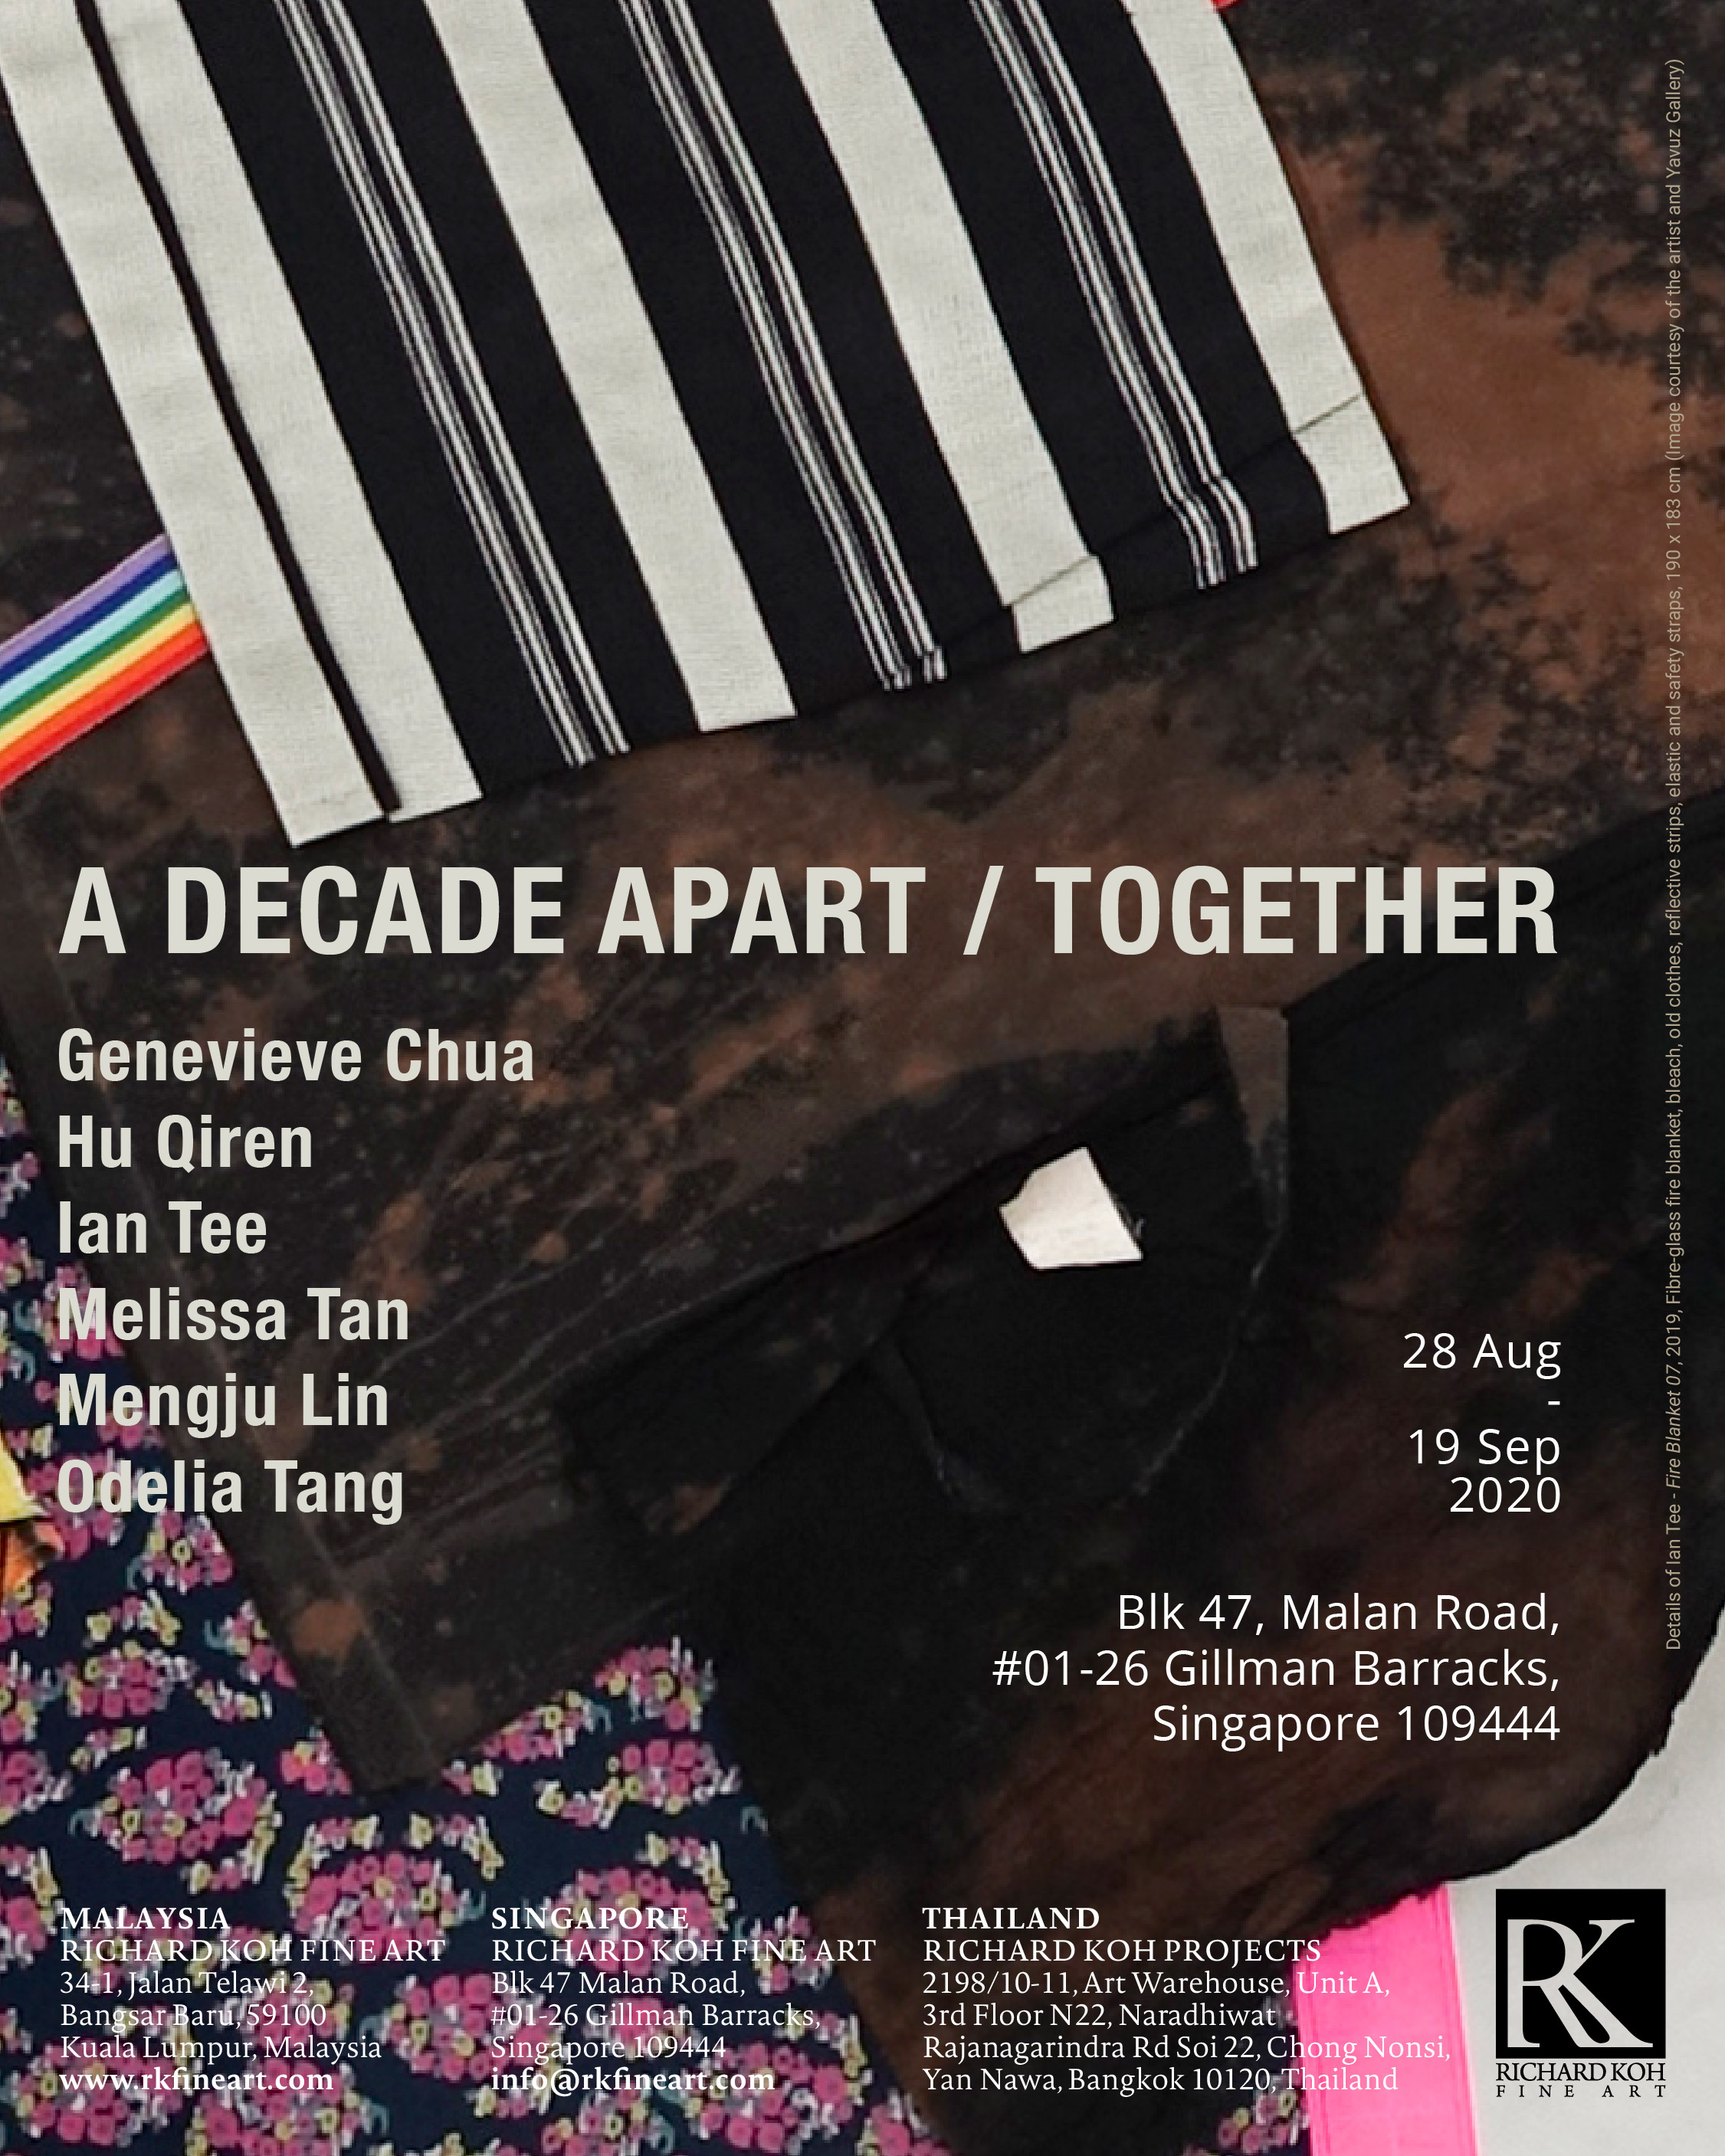   Genevieve Chua, Hu Qiren, Ian Tee, Melissa Tan, Mengju Lin & Odelia Tang – A DECADE APART / TOGETHER